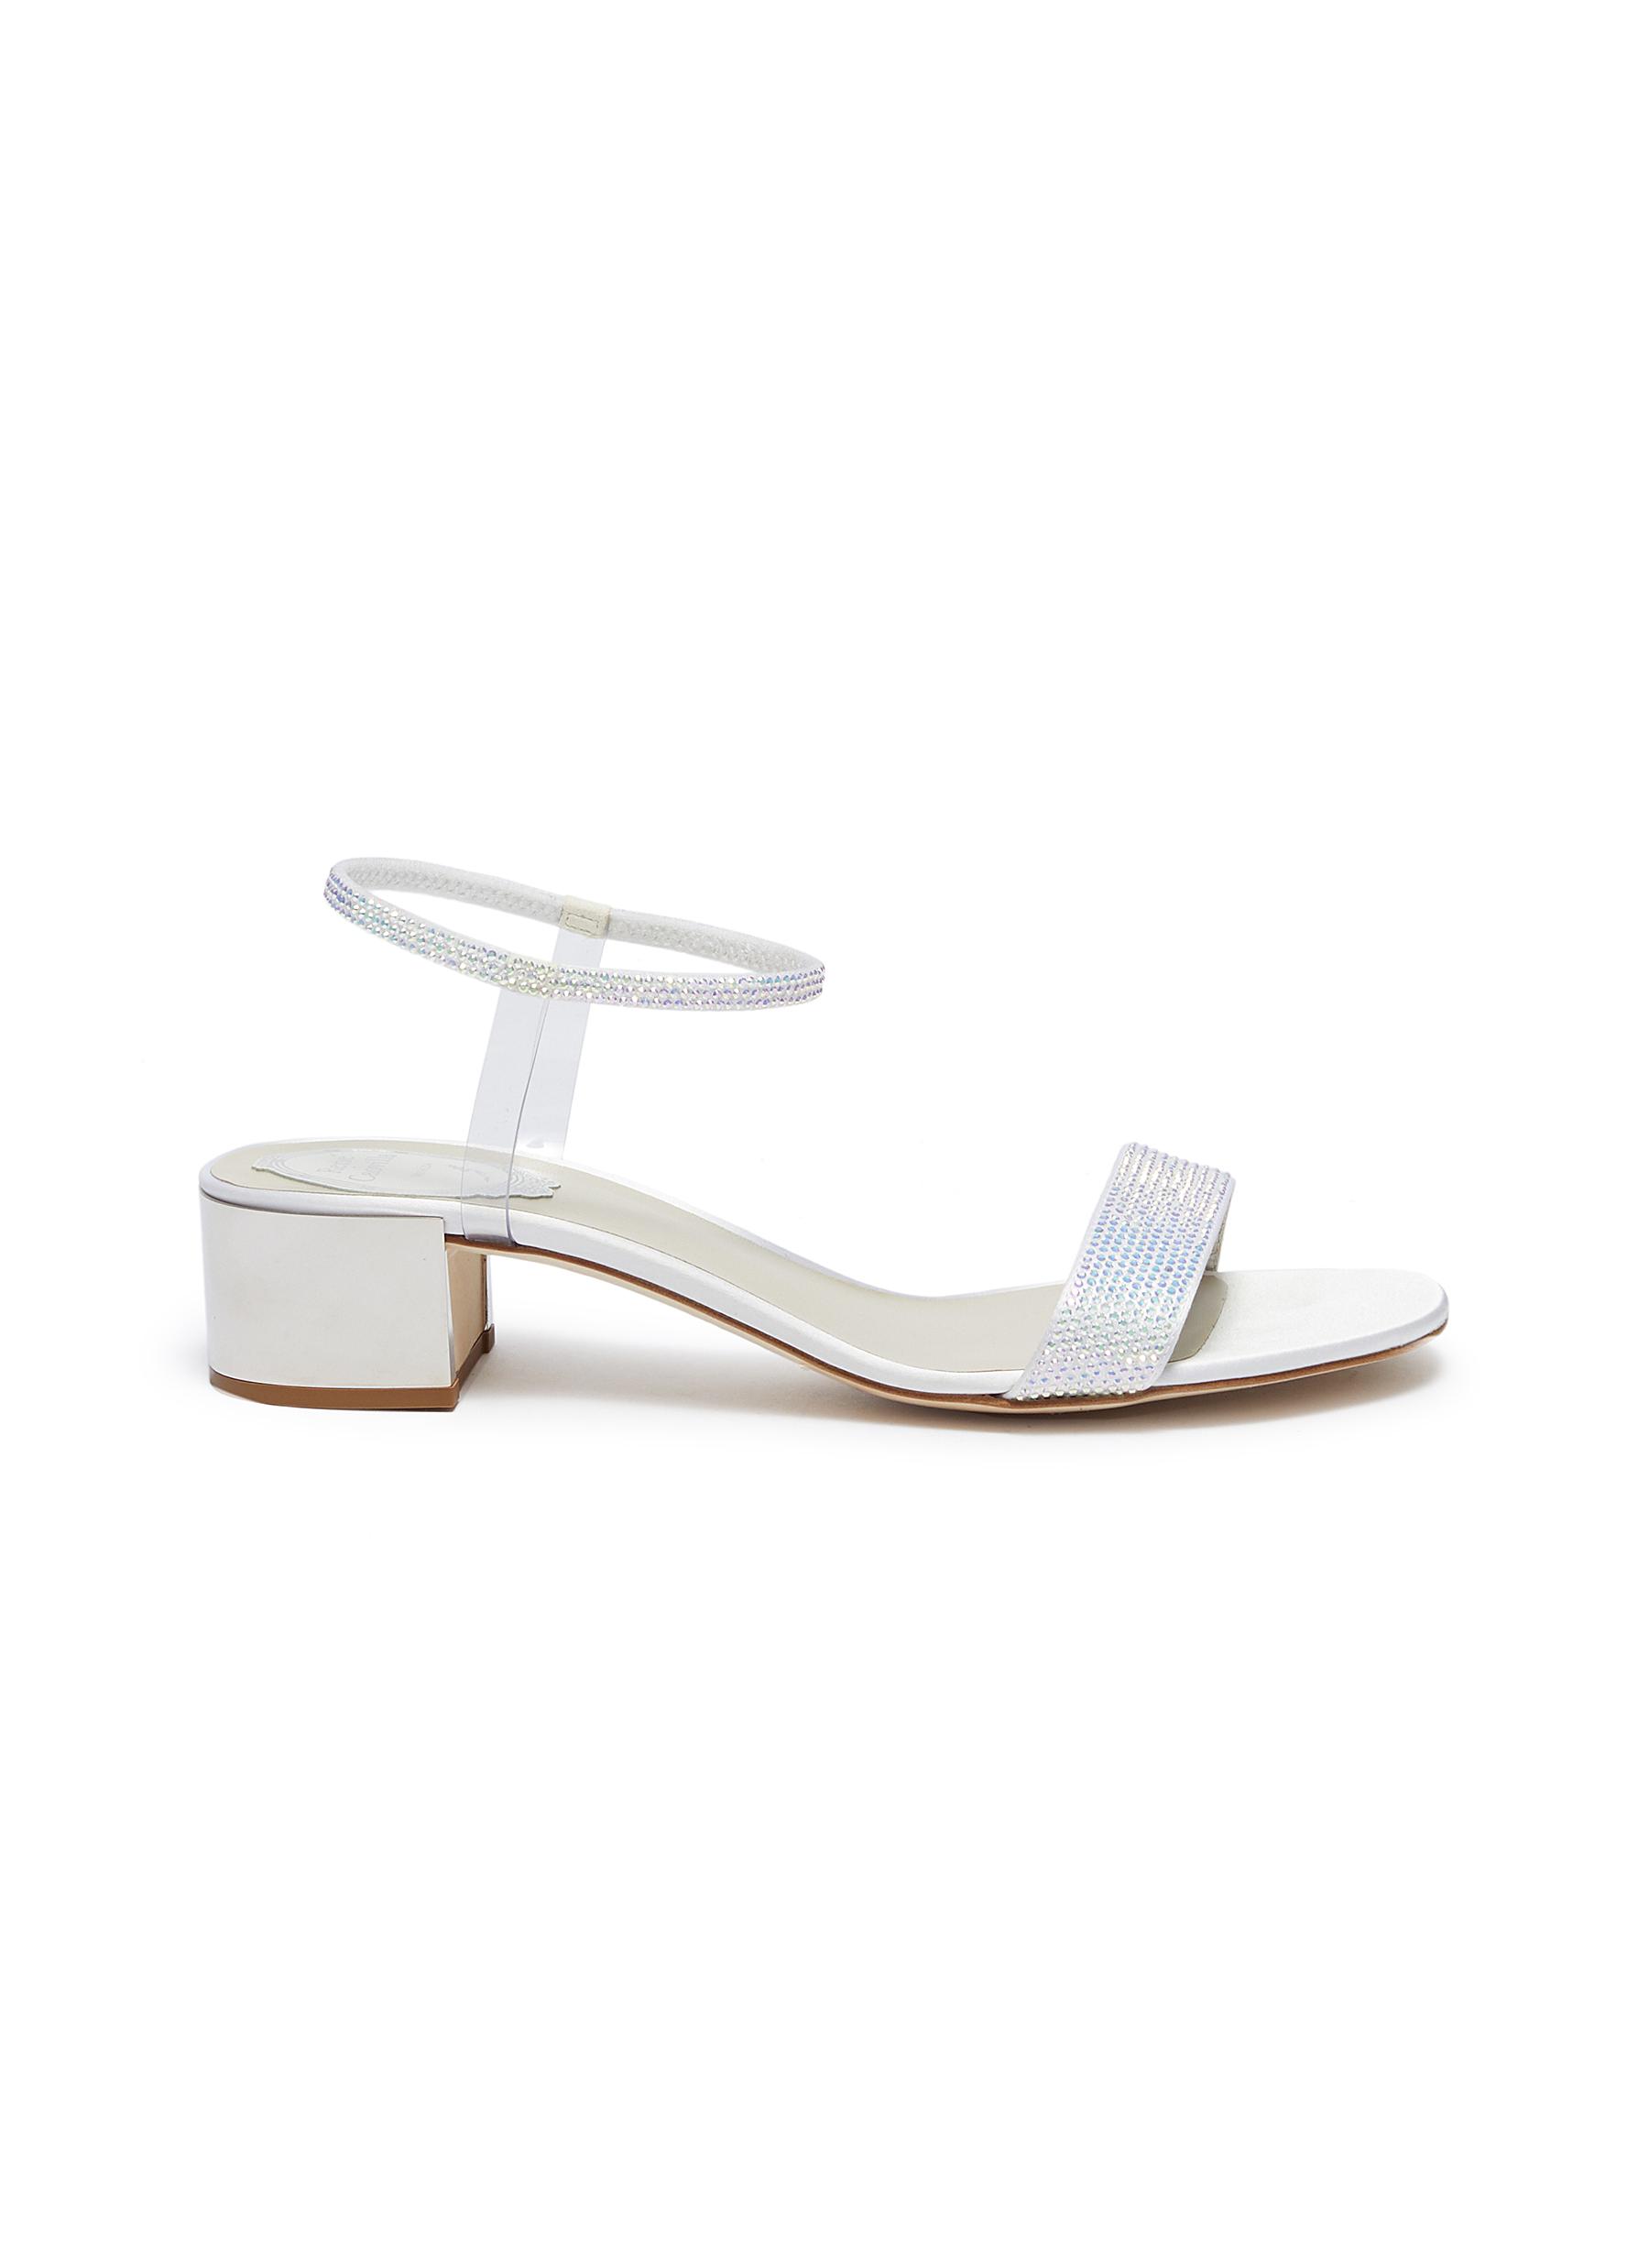 Elastica 40 ankle strap PVC strass satin sandals by René Caovilla